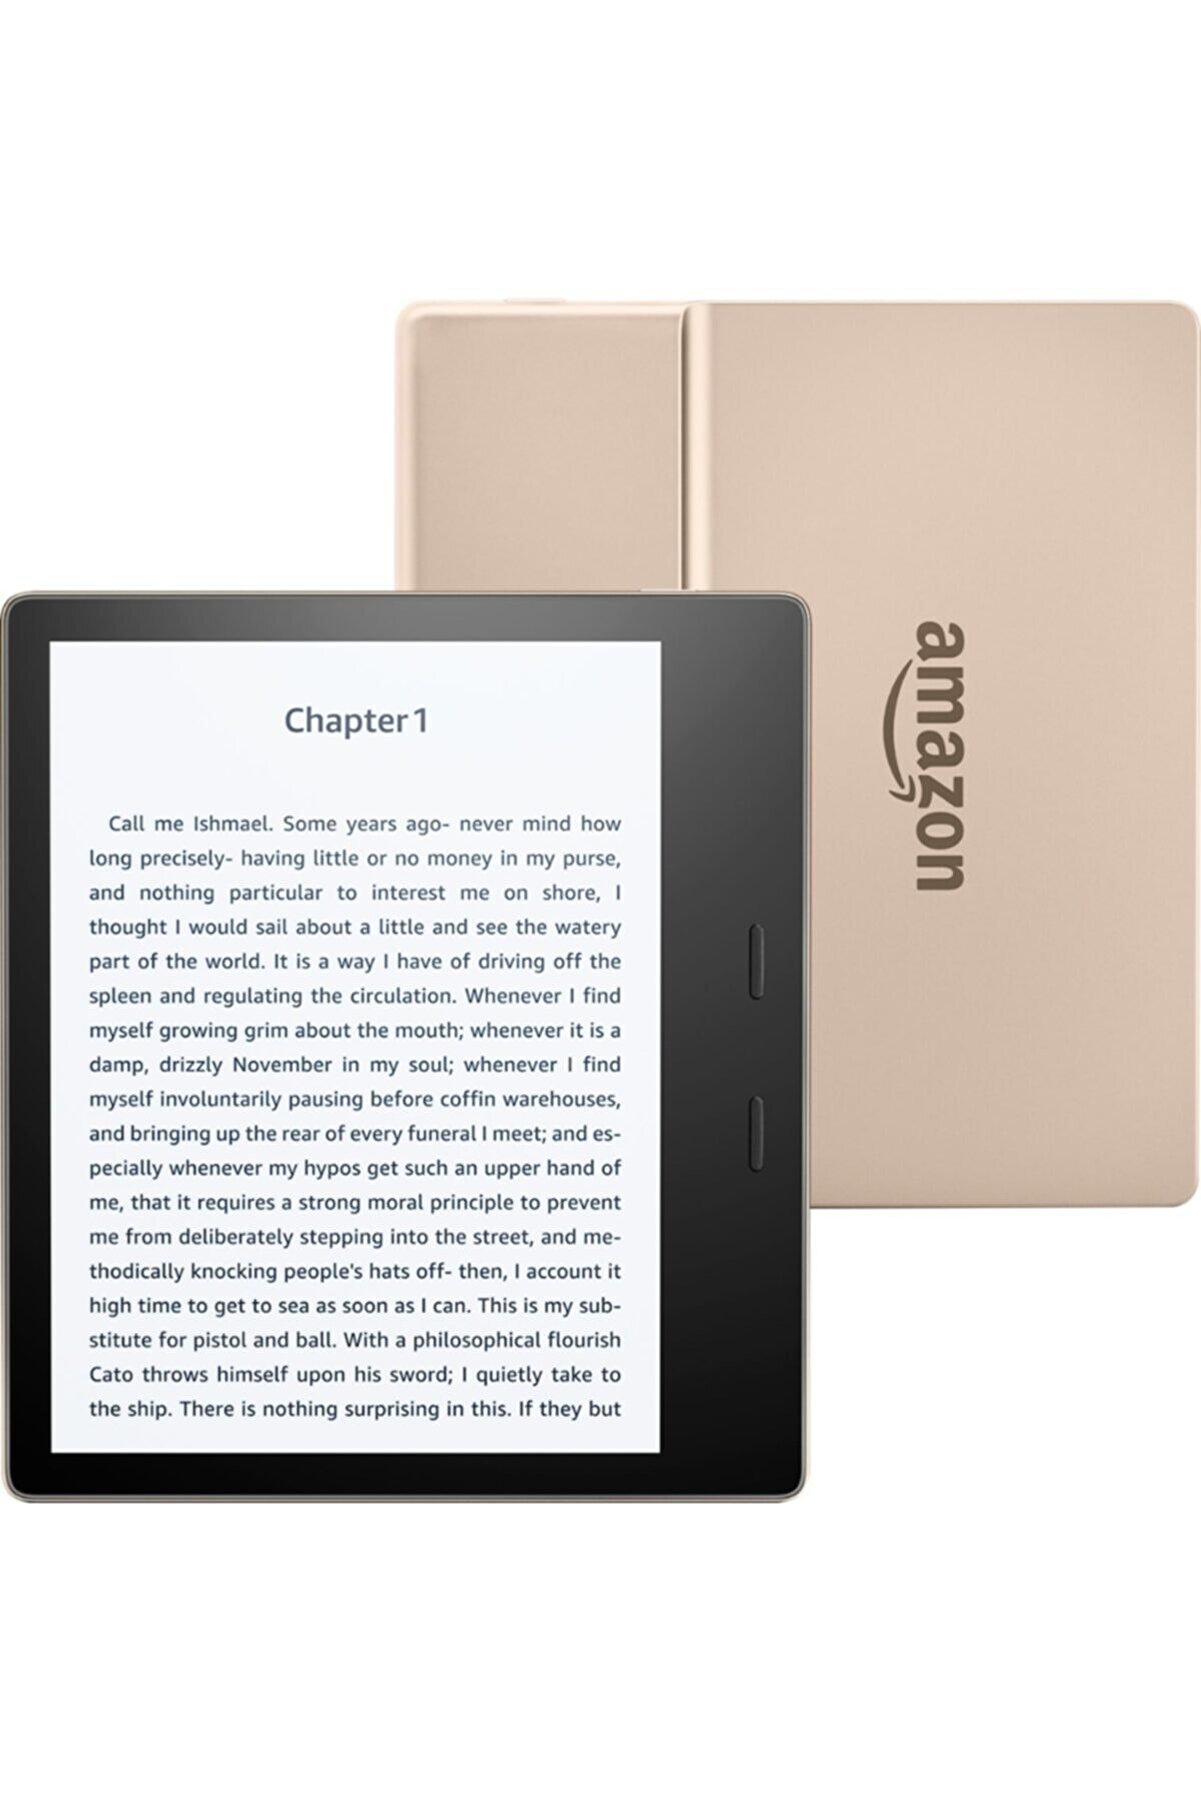 Amazon Kindle Oasis 7" 32gb 9. Nesil E-kitap Okuyucu